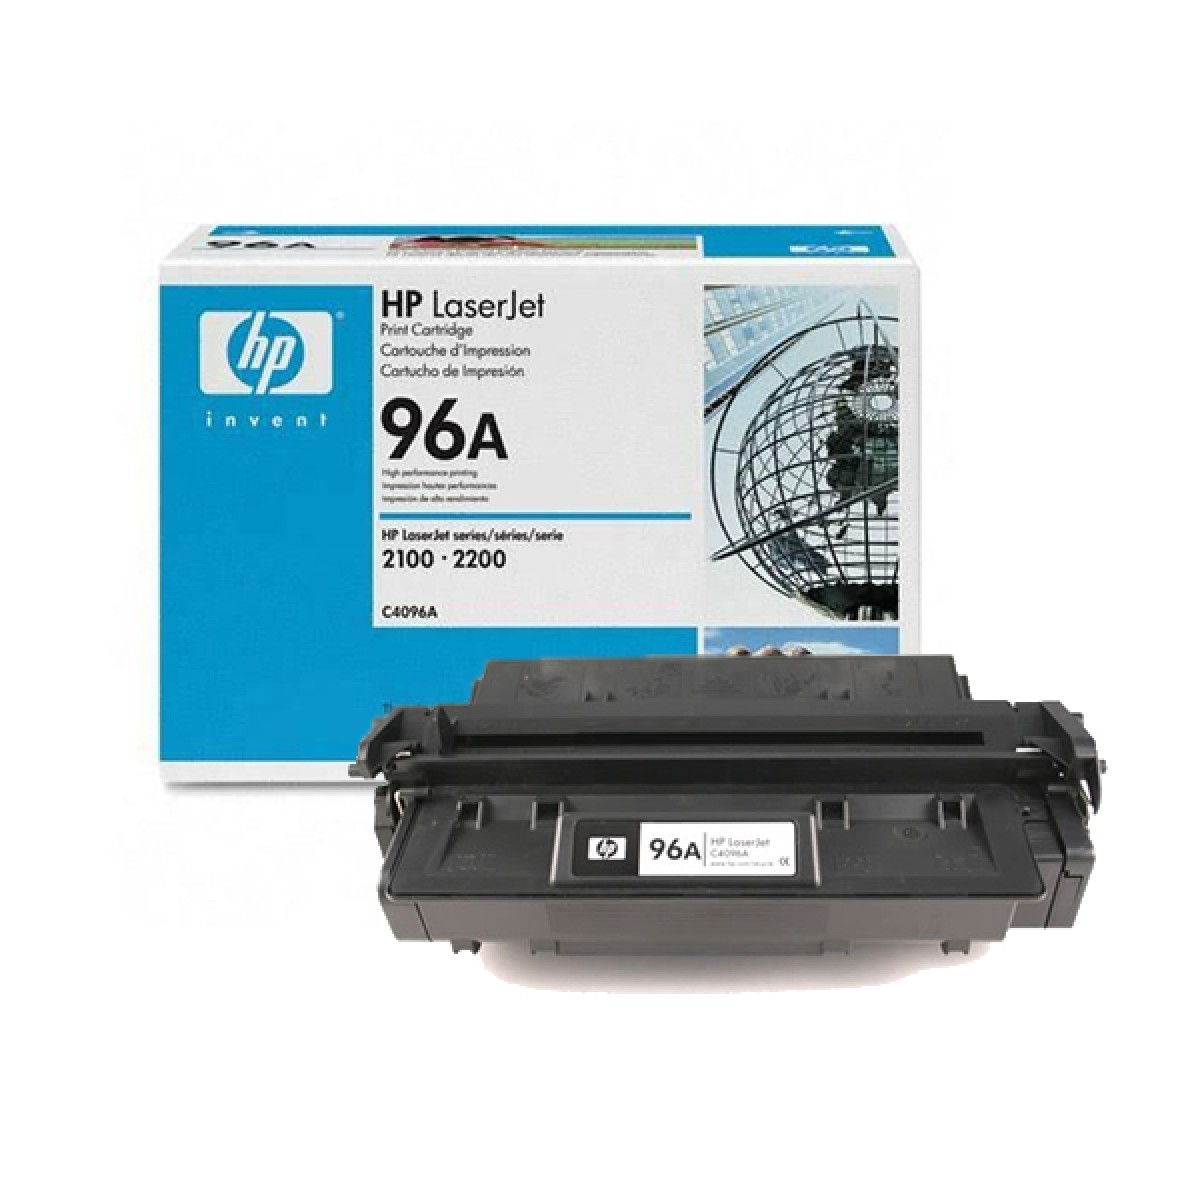 HP No 96A Laser Cartridge (C4096A)